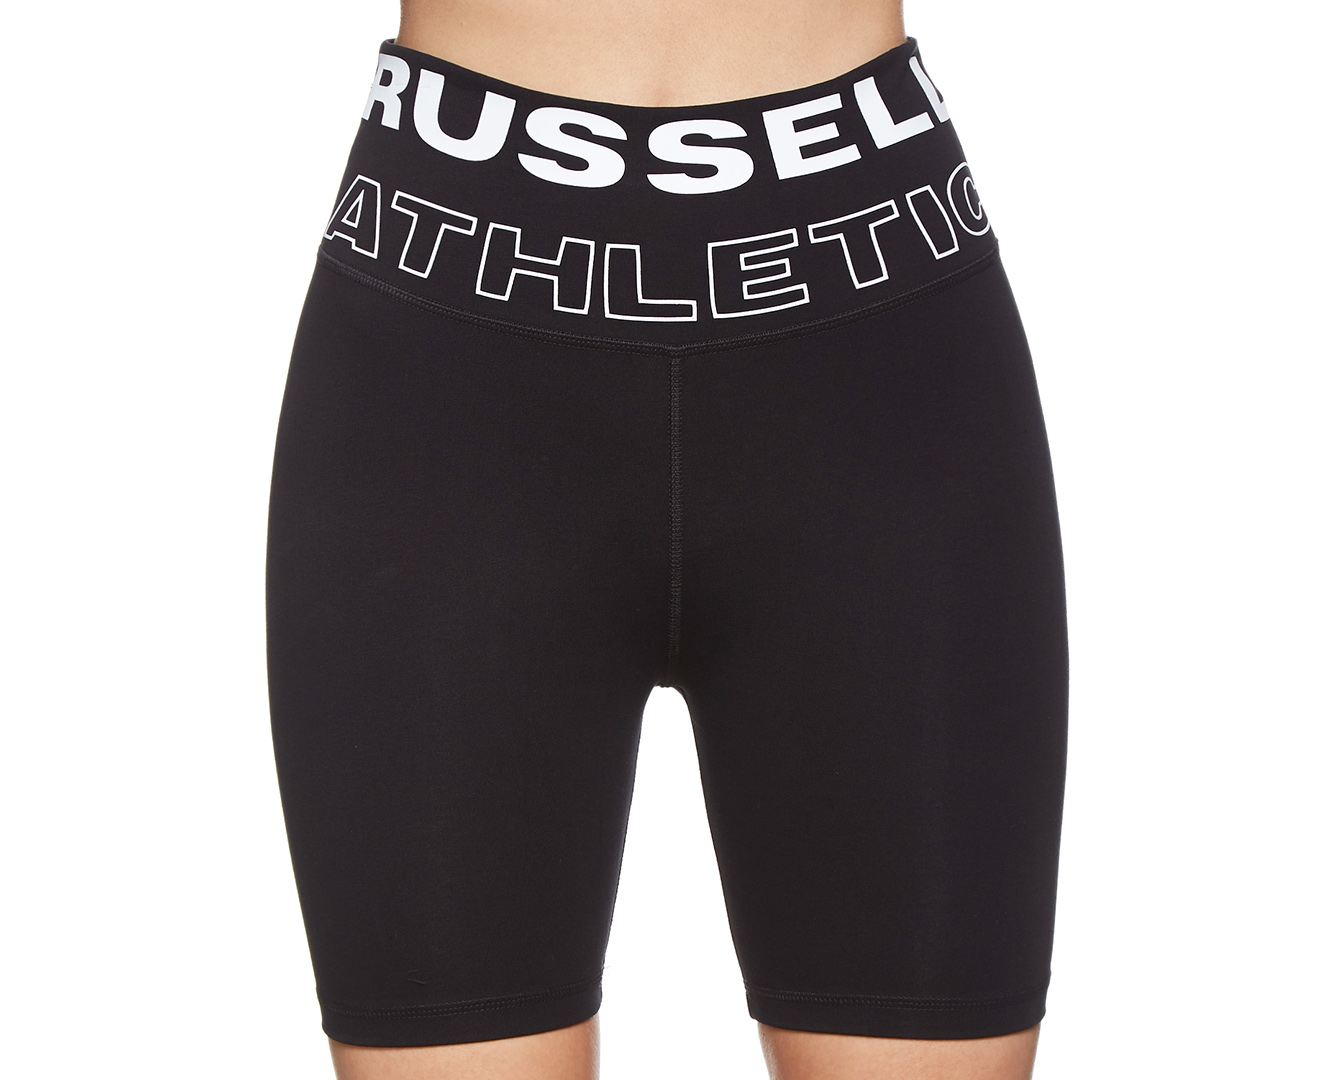 Russell Athletic Women's Logo Bike Shorts - Black | Catch.co.nz